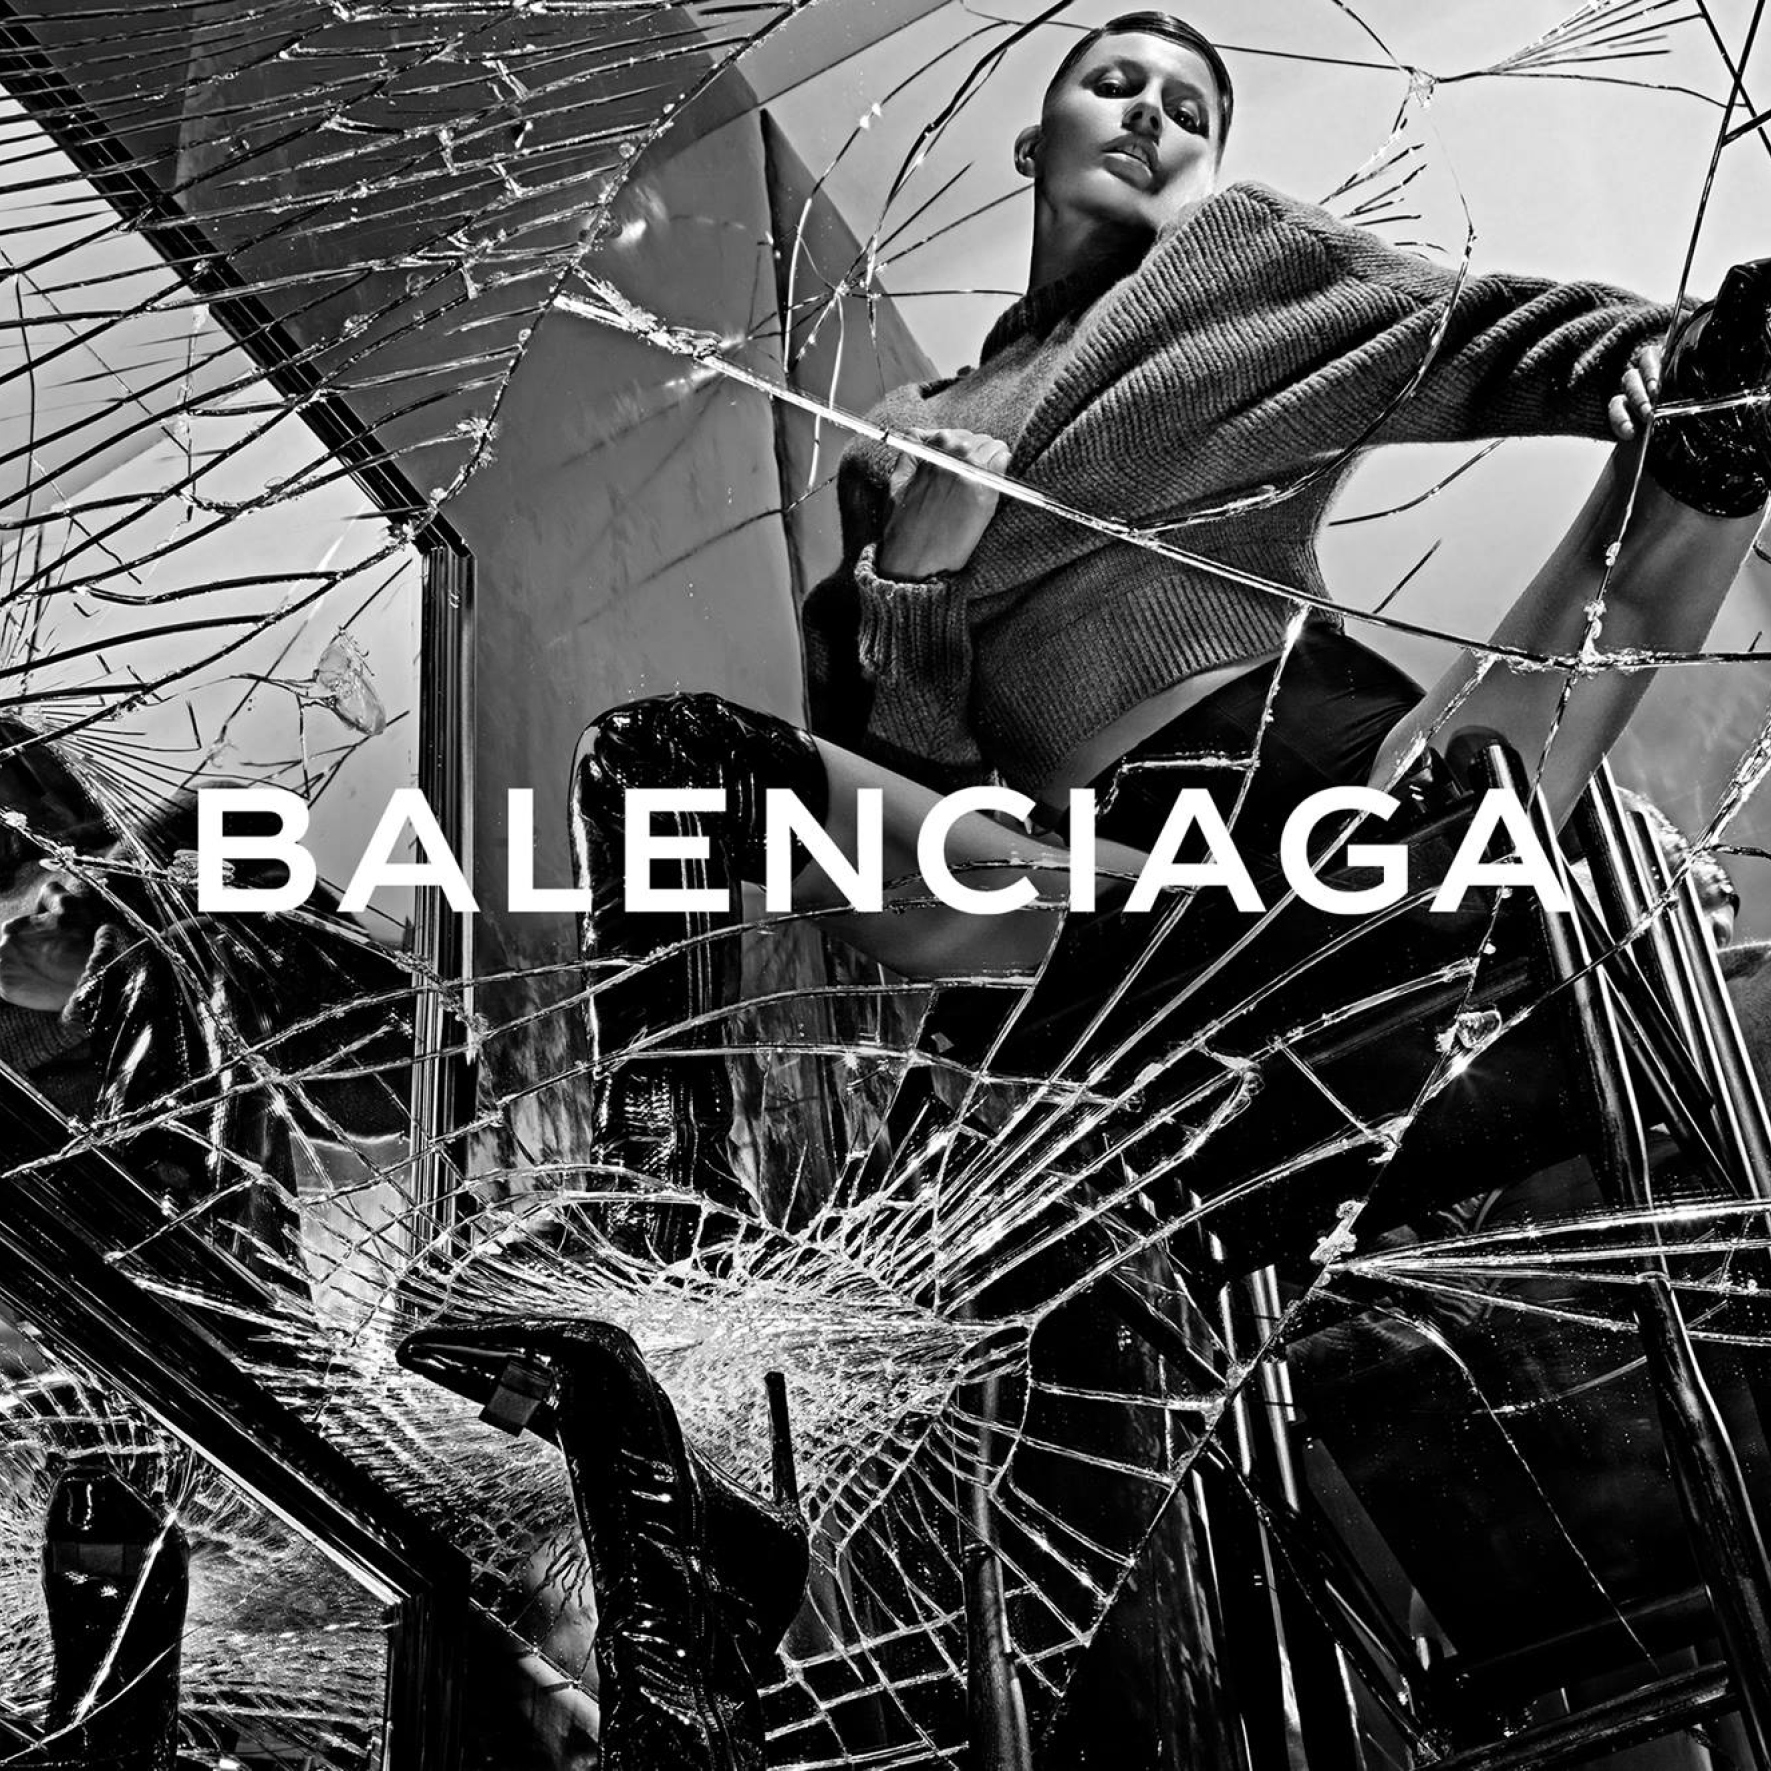 Check Out Alexander Wang's New Ad Campaign for Balenciaga